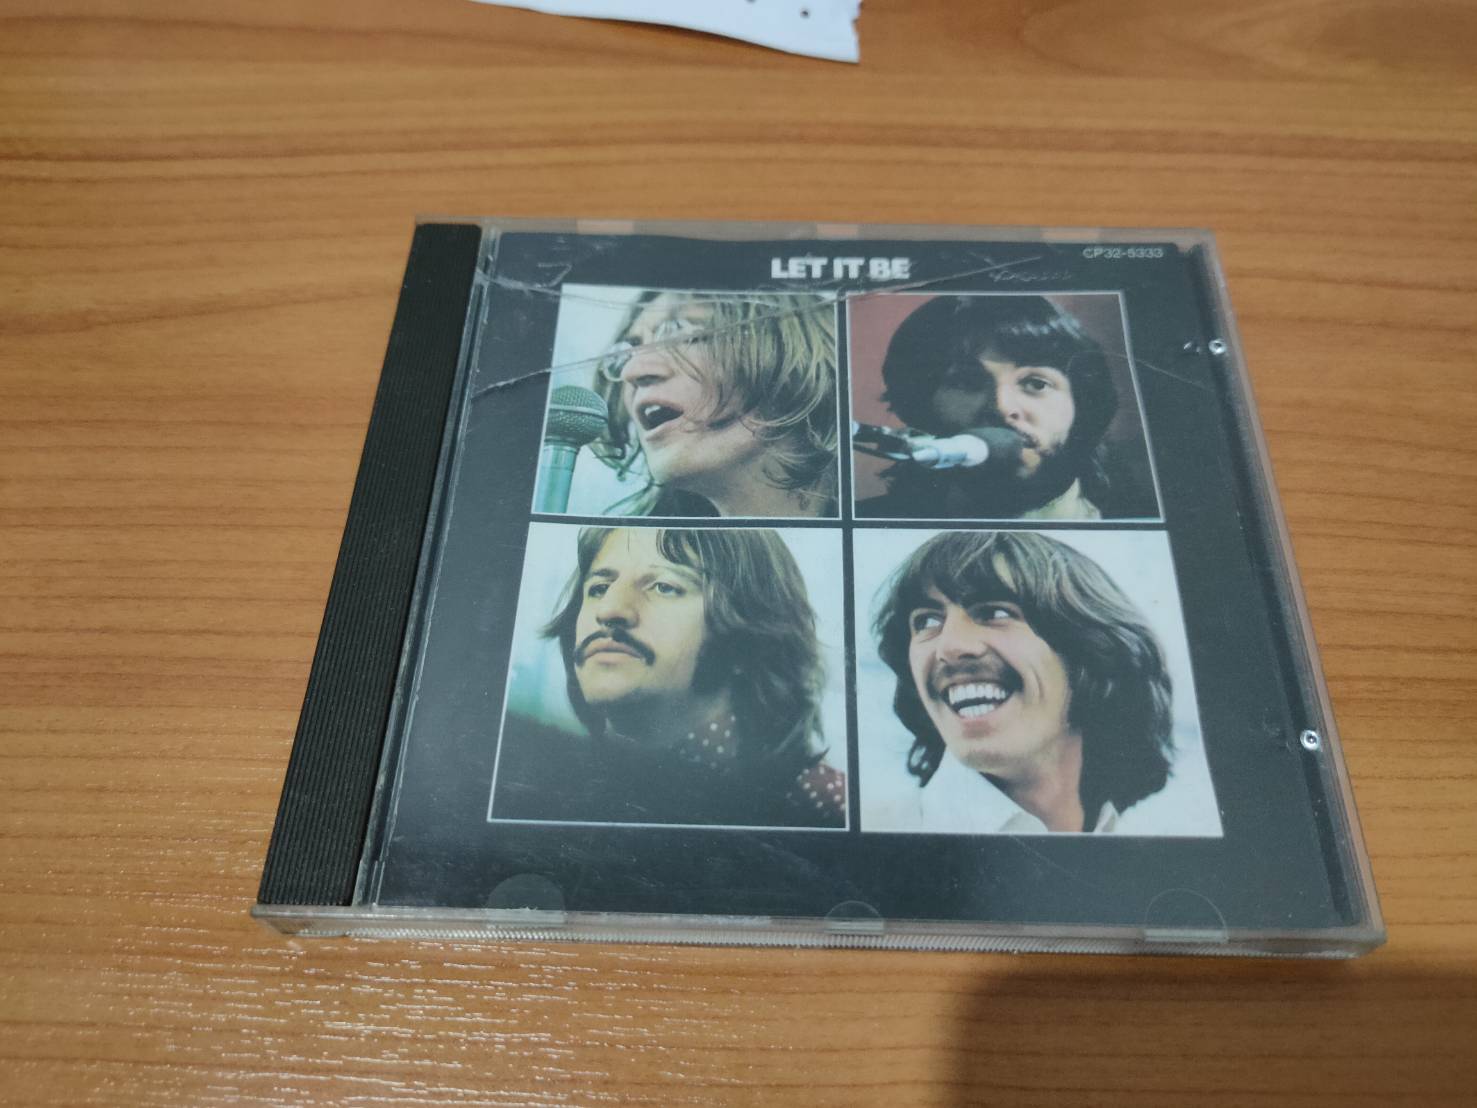 CD.MUSIC ซีดีเพลง เพลงสากล The Beatles Let It Be (***โปรดดูภาพสินค้าอย่างละเอียดก่อนทำการสั่งซื้อ*** )